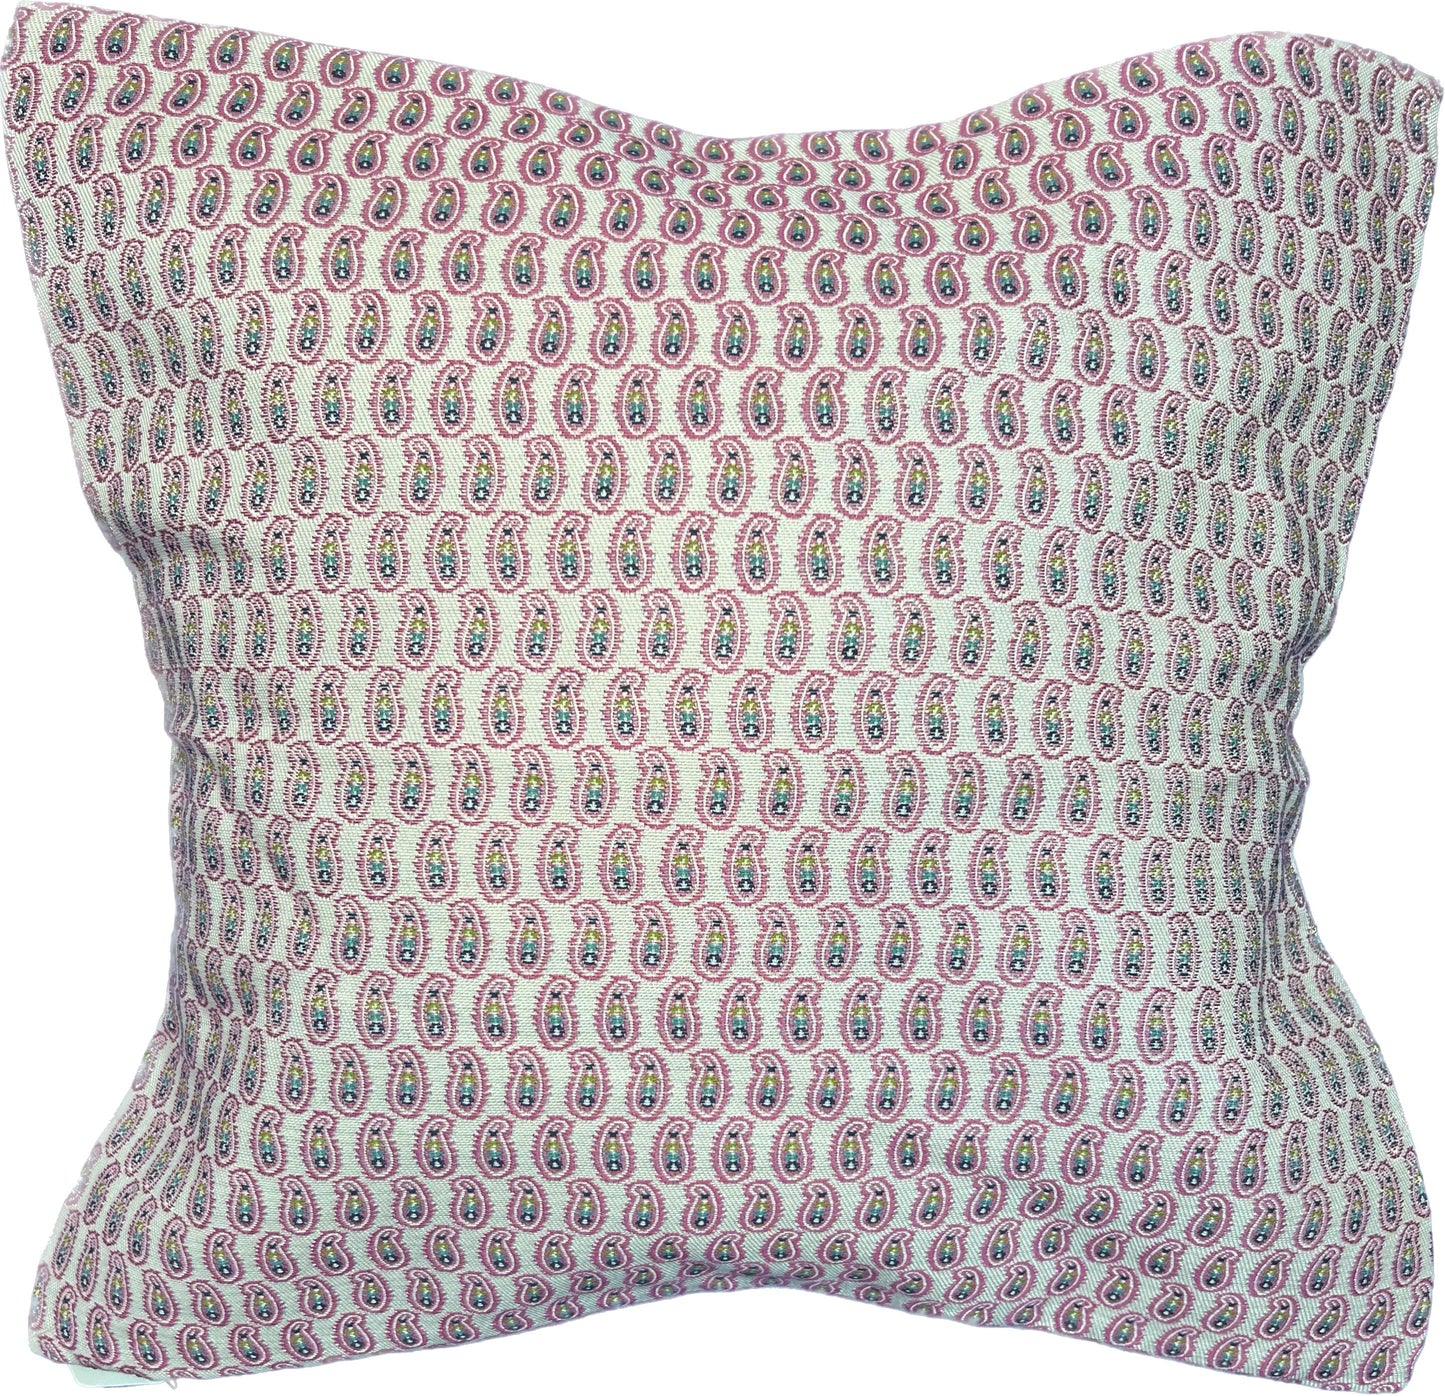 20"x20" Small Scale Paisley Pillow Cover (Robert Allen: Small Paisley - Fuchsia 227953)